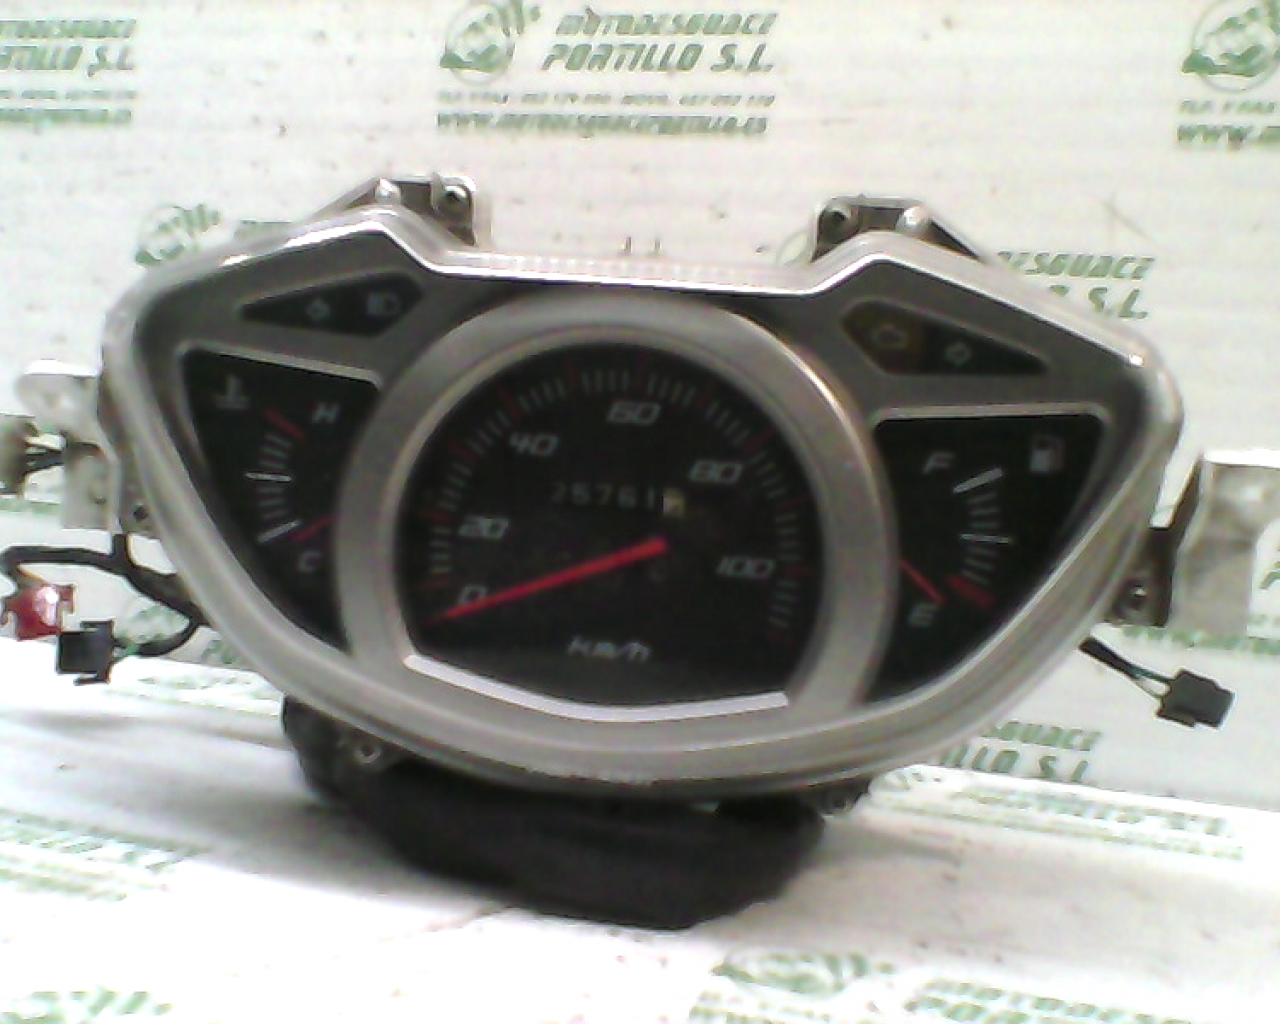 Cuentakilómetros Honda Lead 110 (2008-2010)